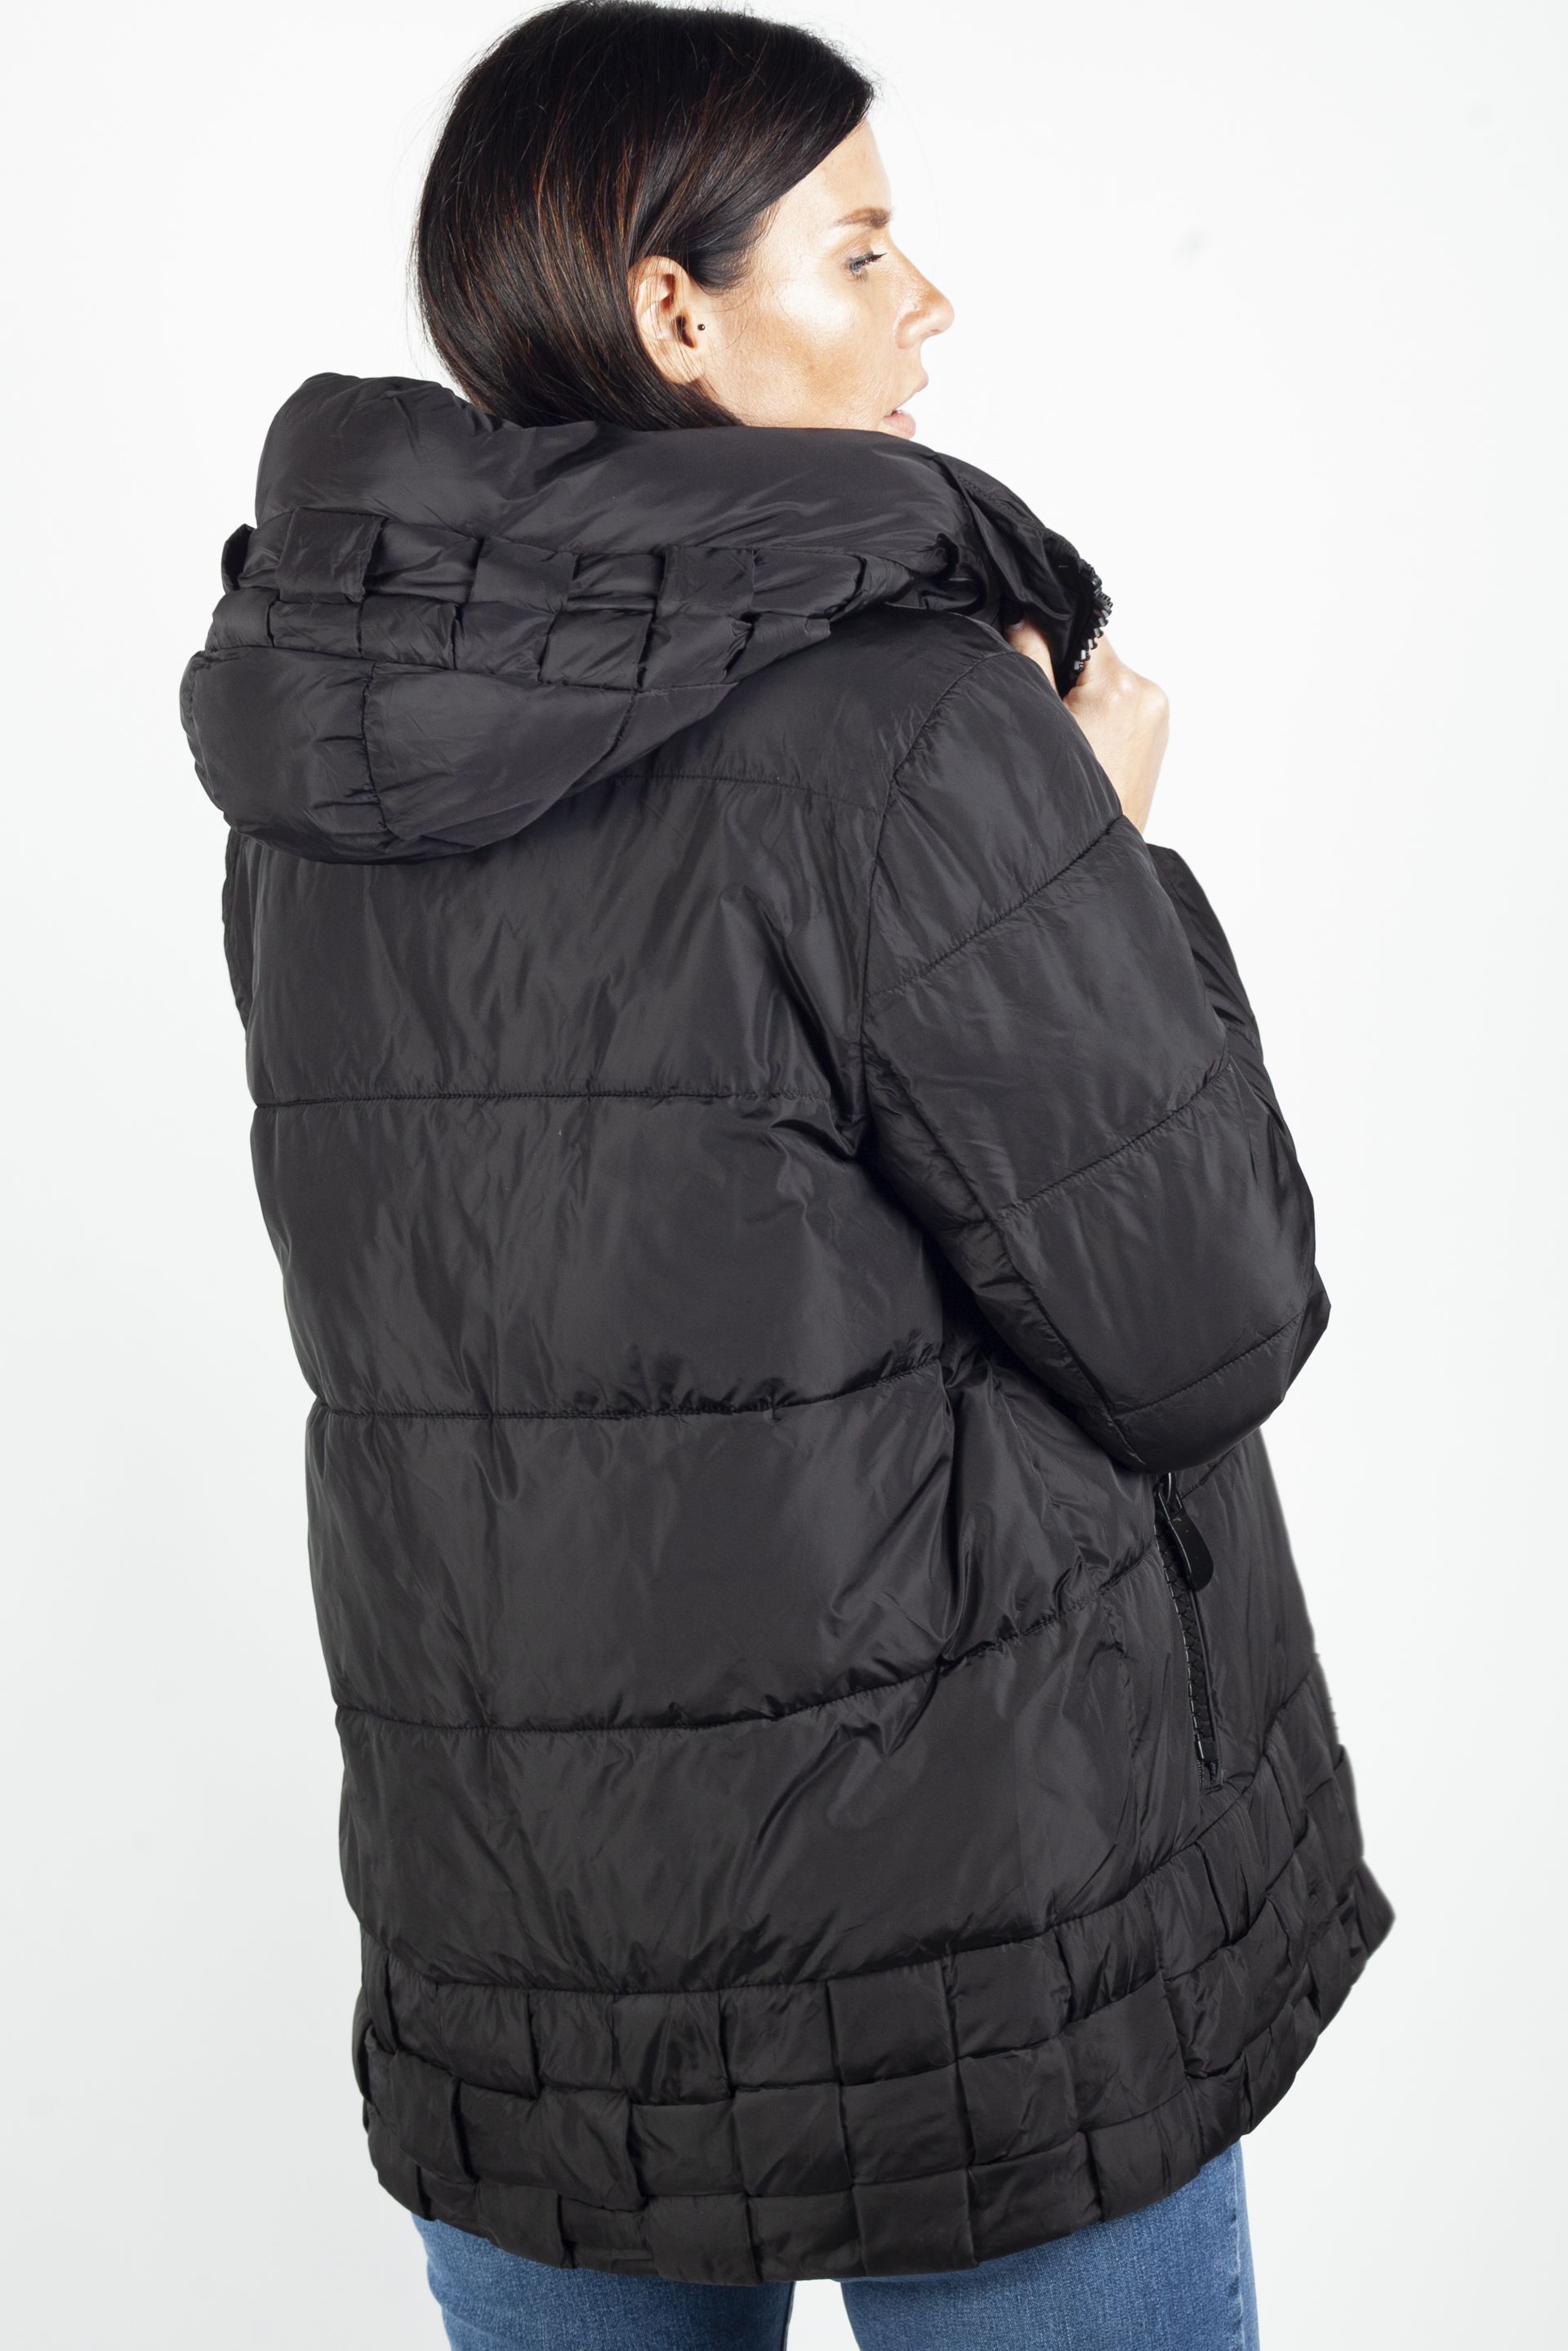 Winter jacket FLY 2106-BLACK